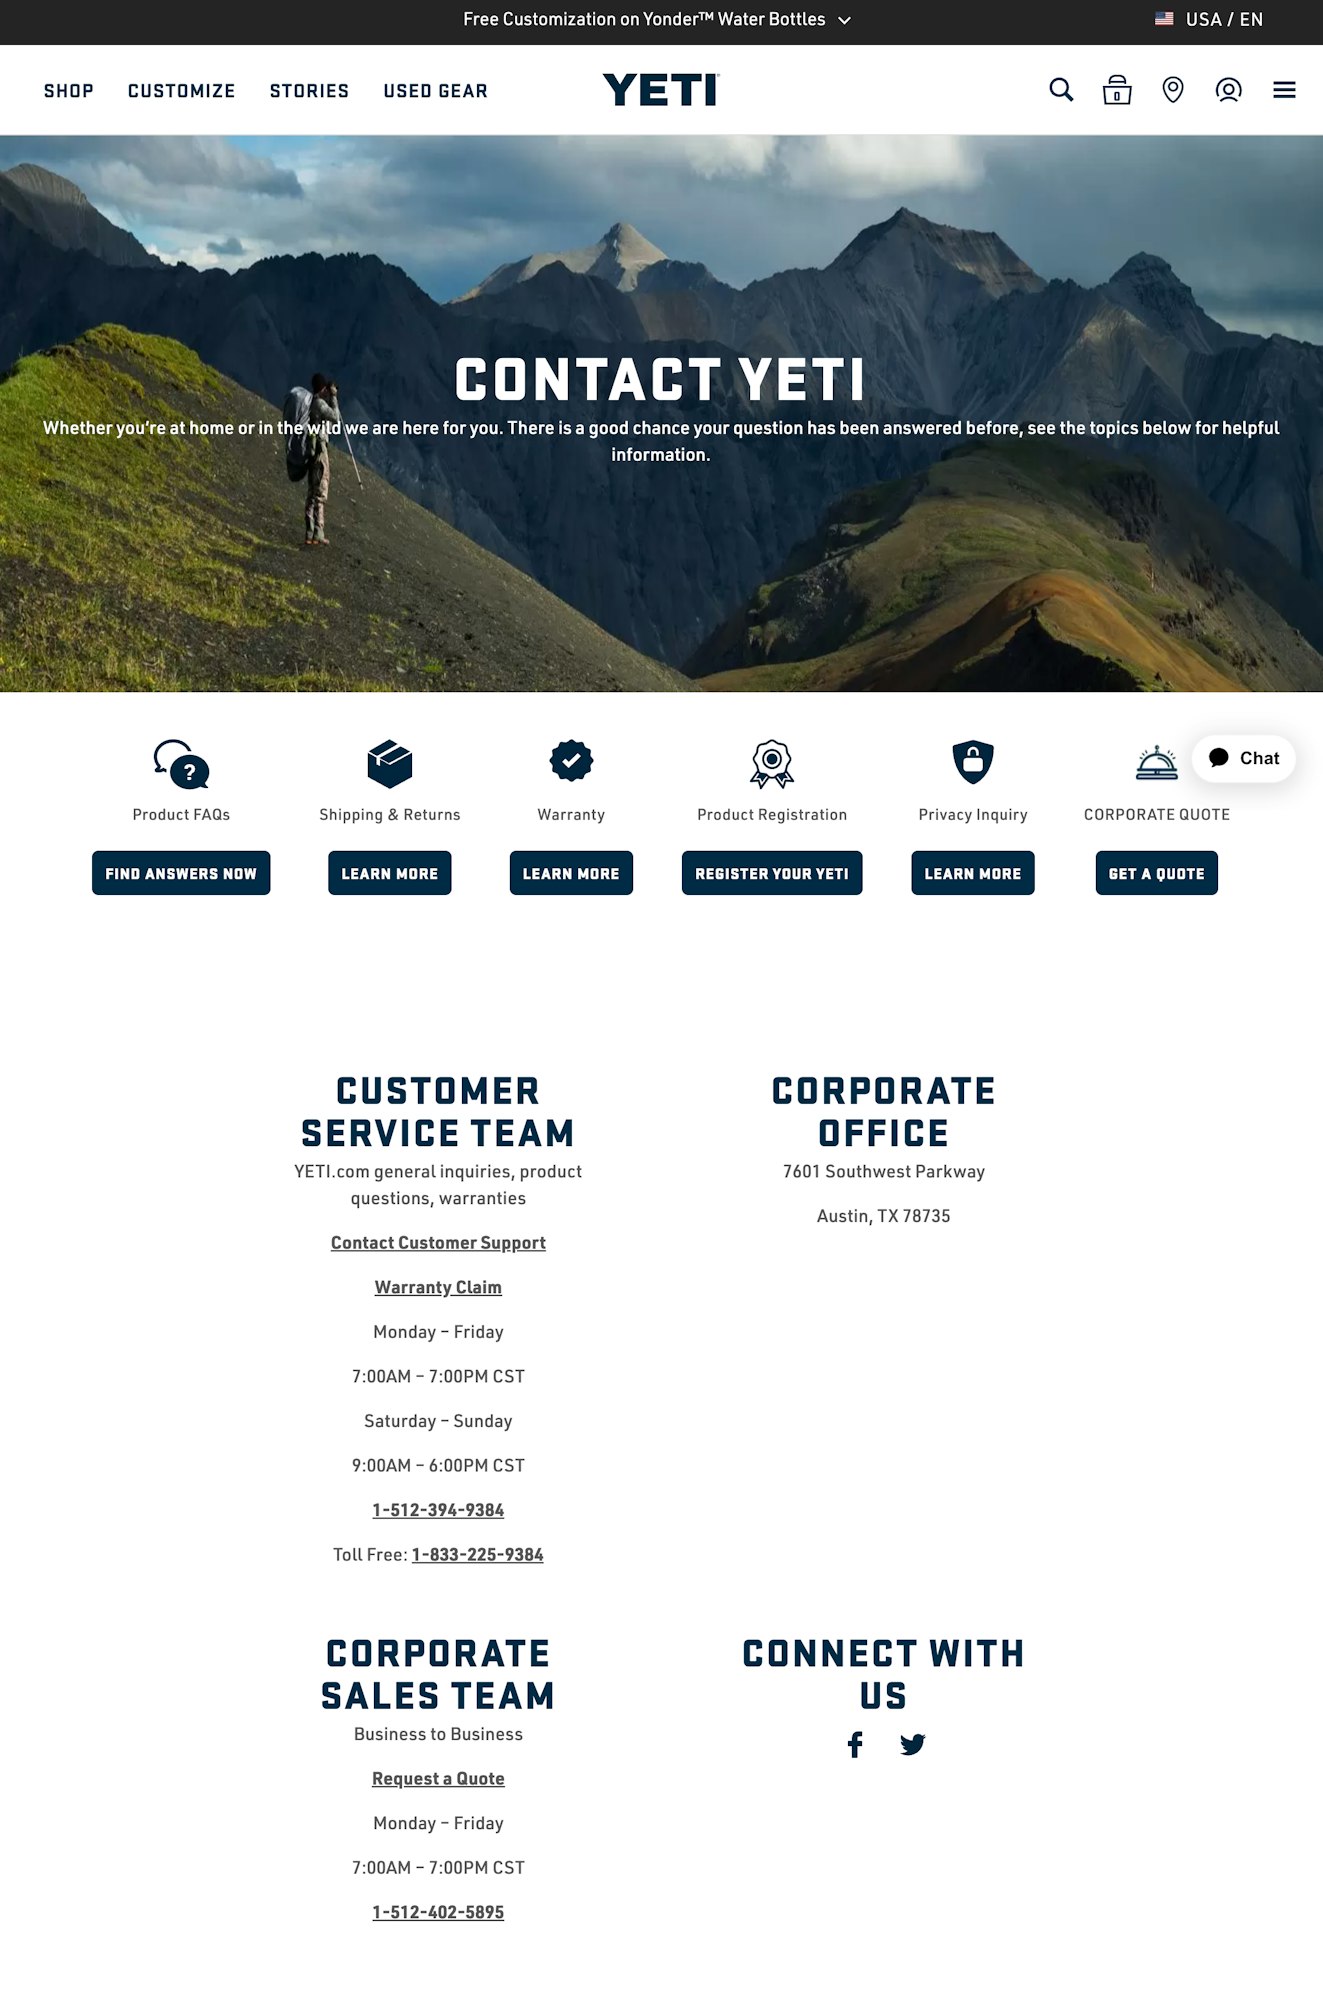 Contact Page: YETI